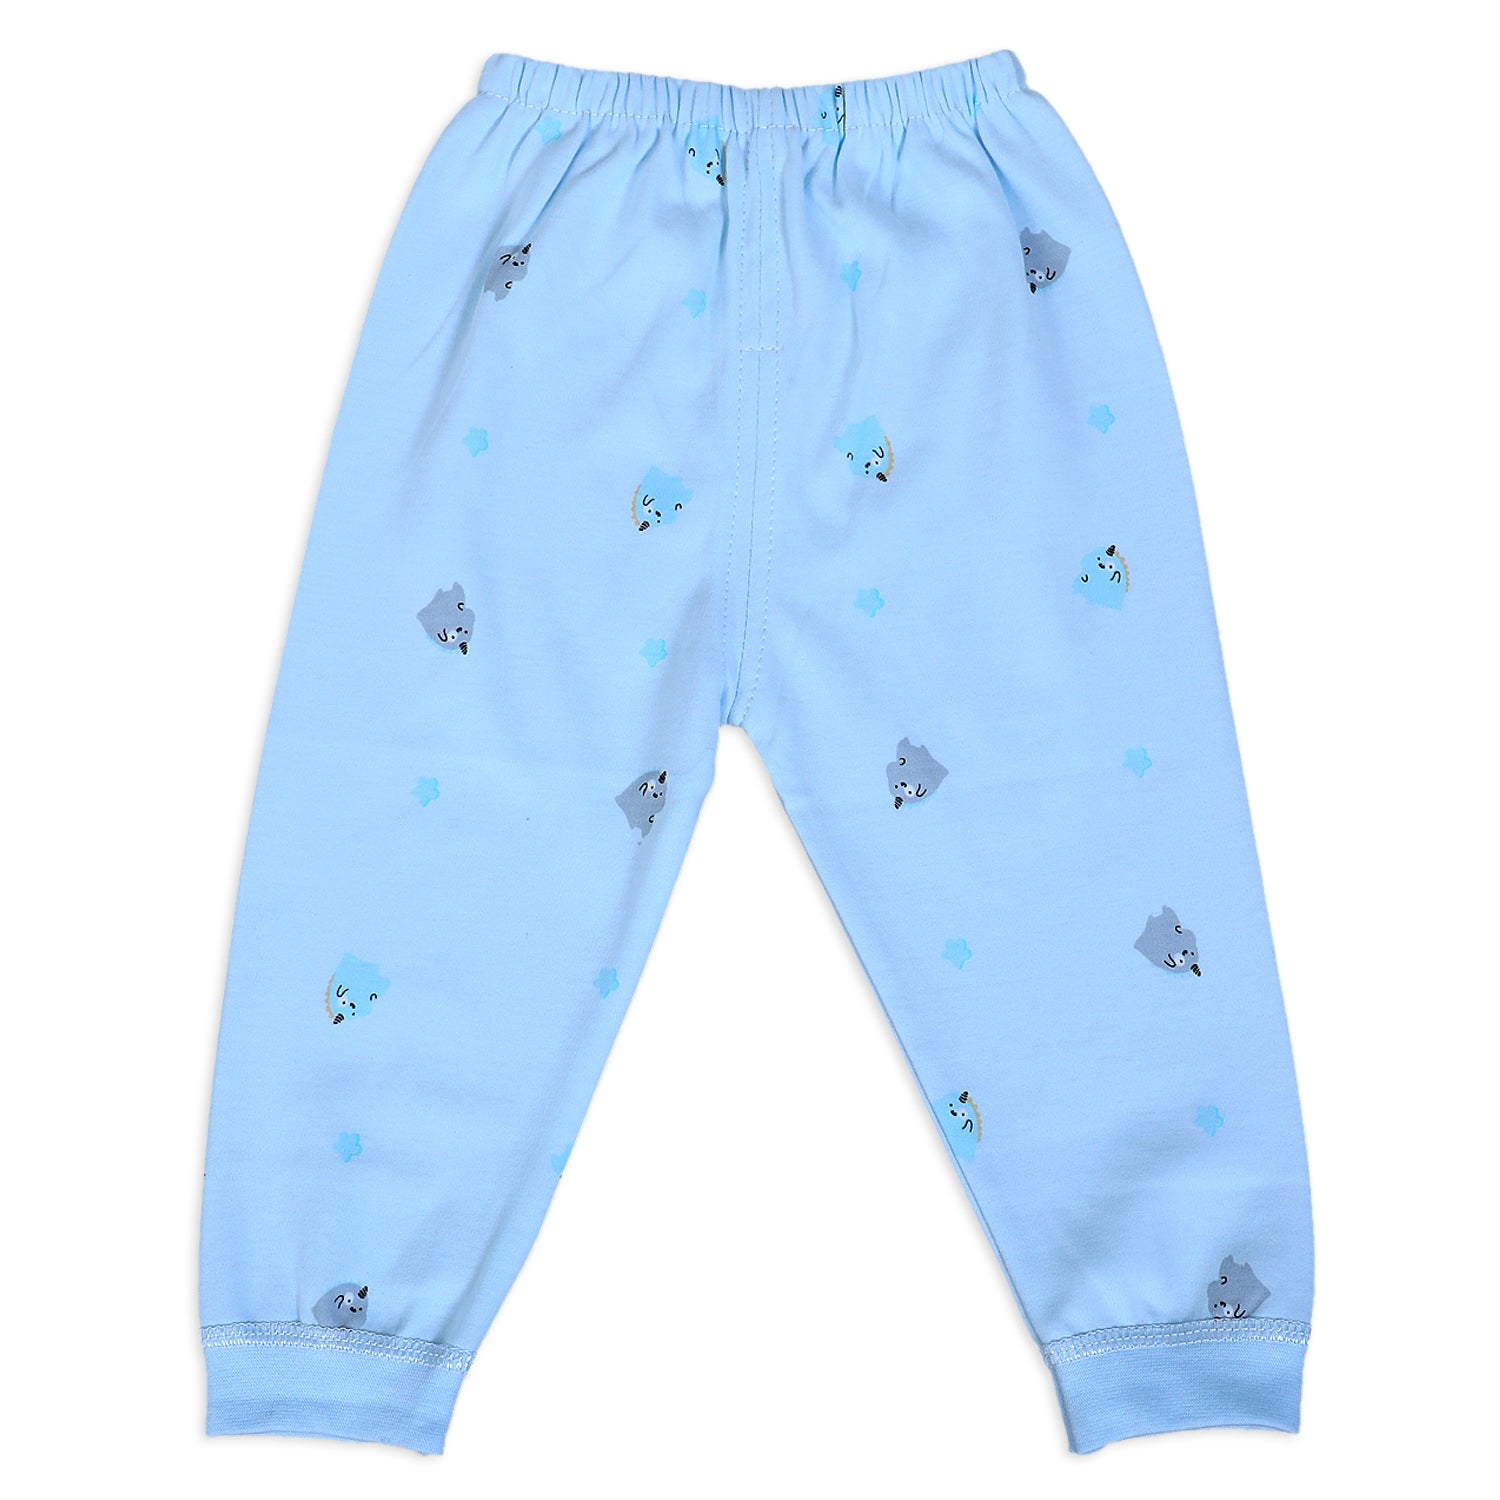 Unicorn Full Sleeves 2 Piece Buttoned Pyjama Set Night Suit - Blue - Baby Moo